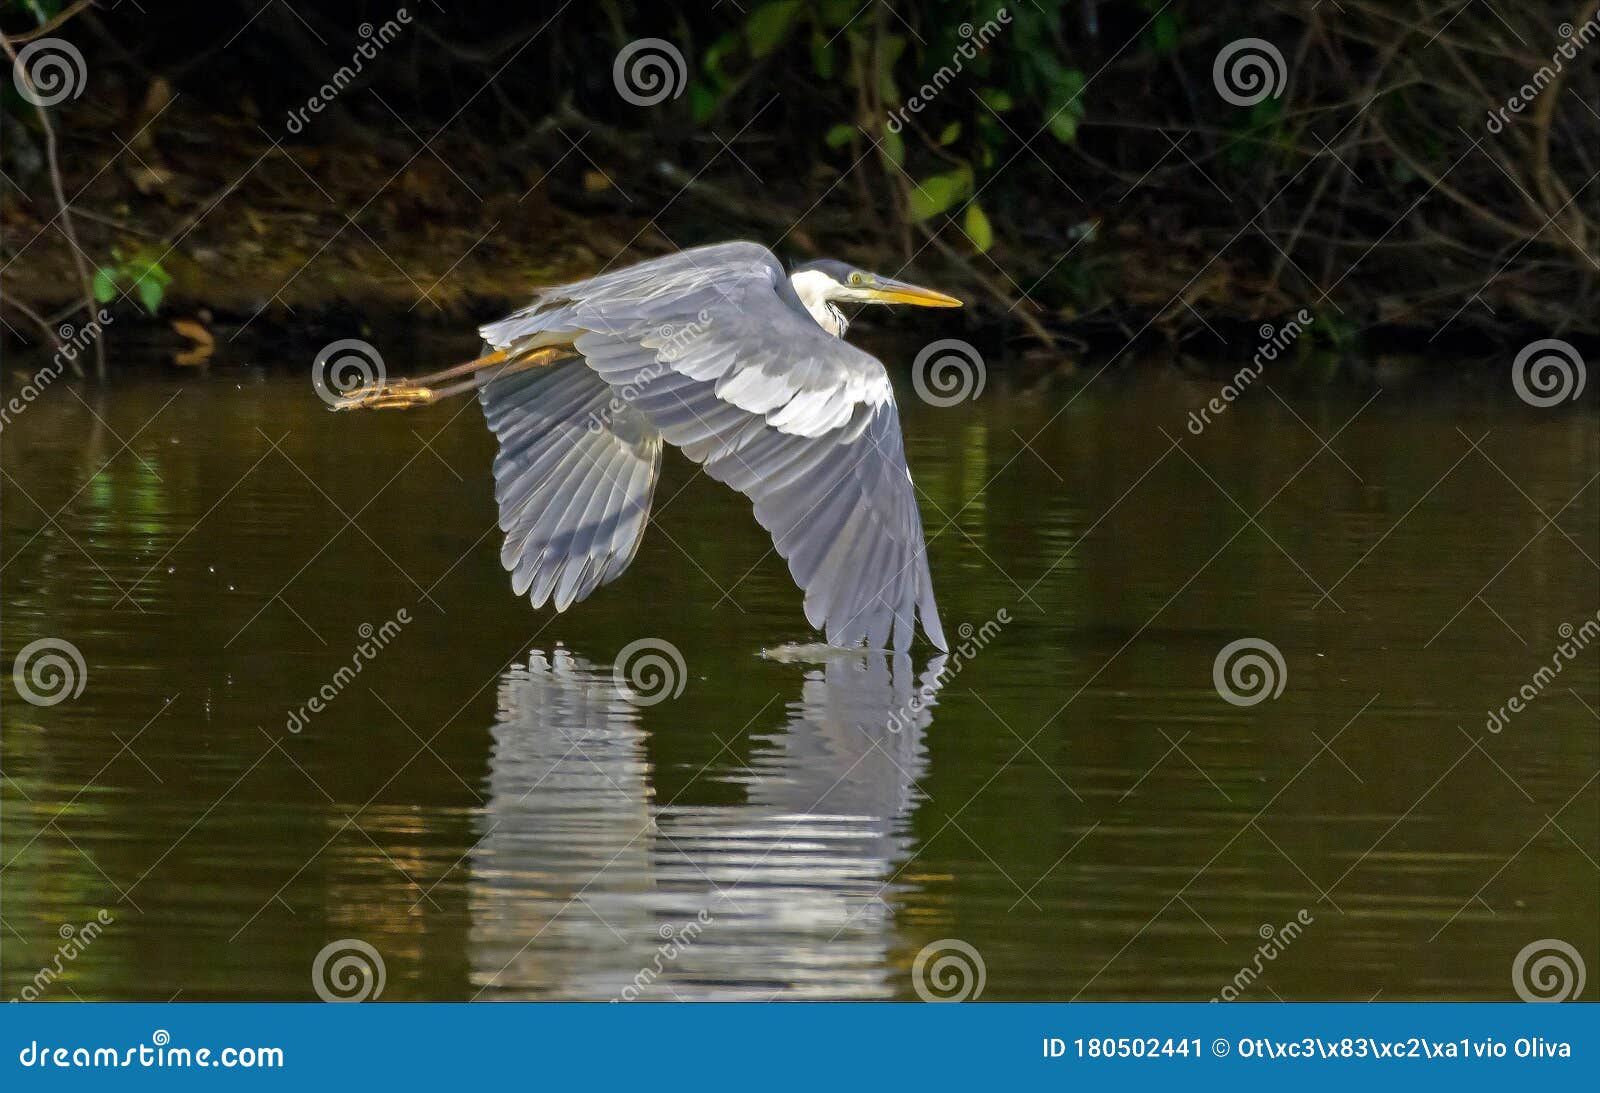 a great blue heron ardea herodias in flight, over piquiri river, pantanal, brazil